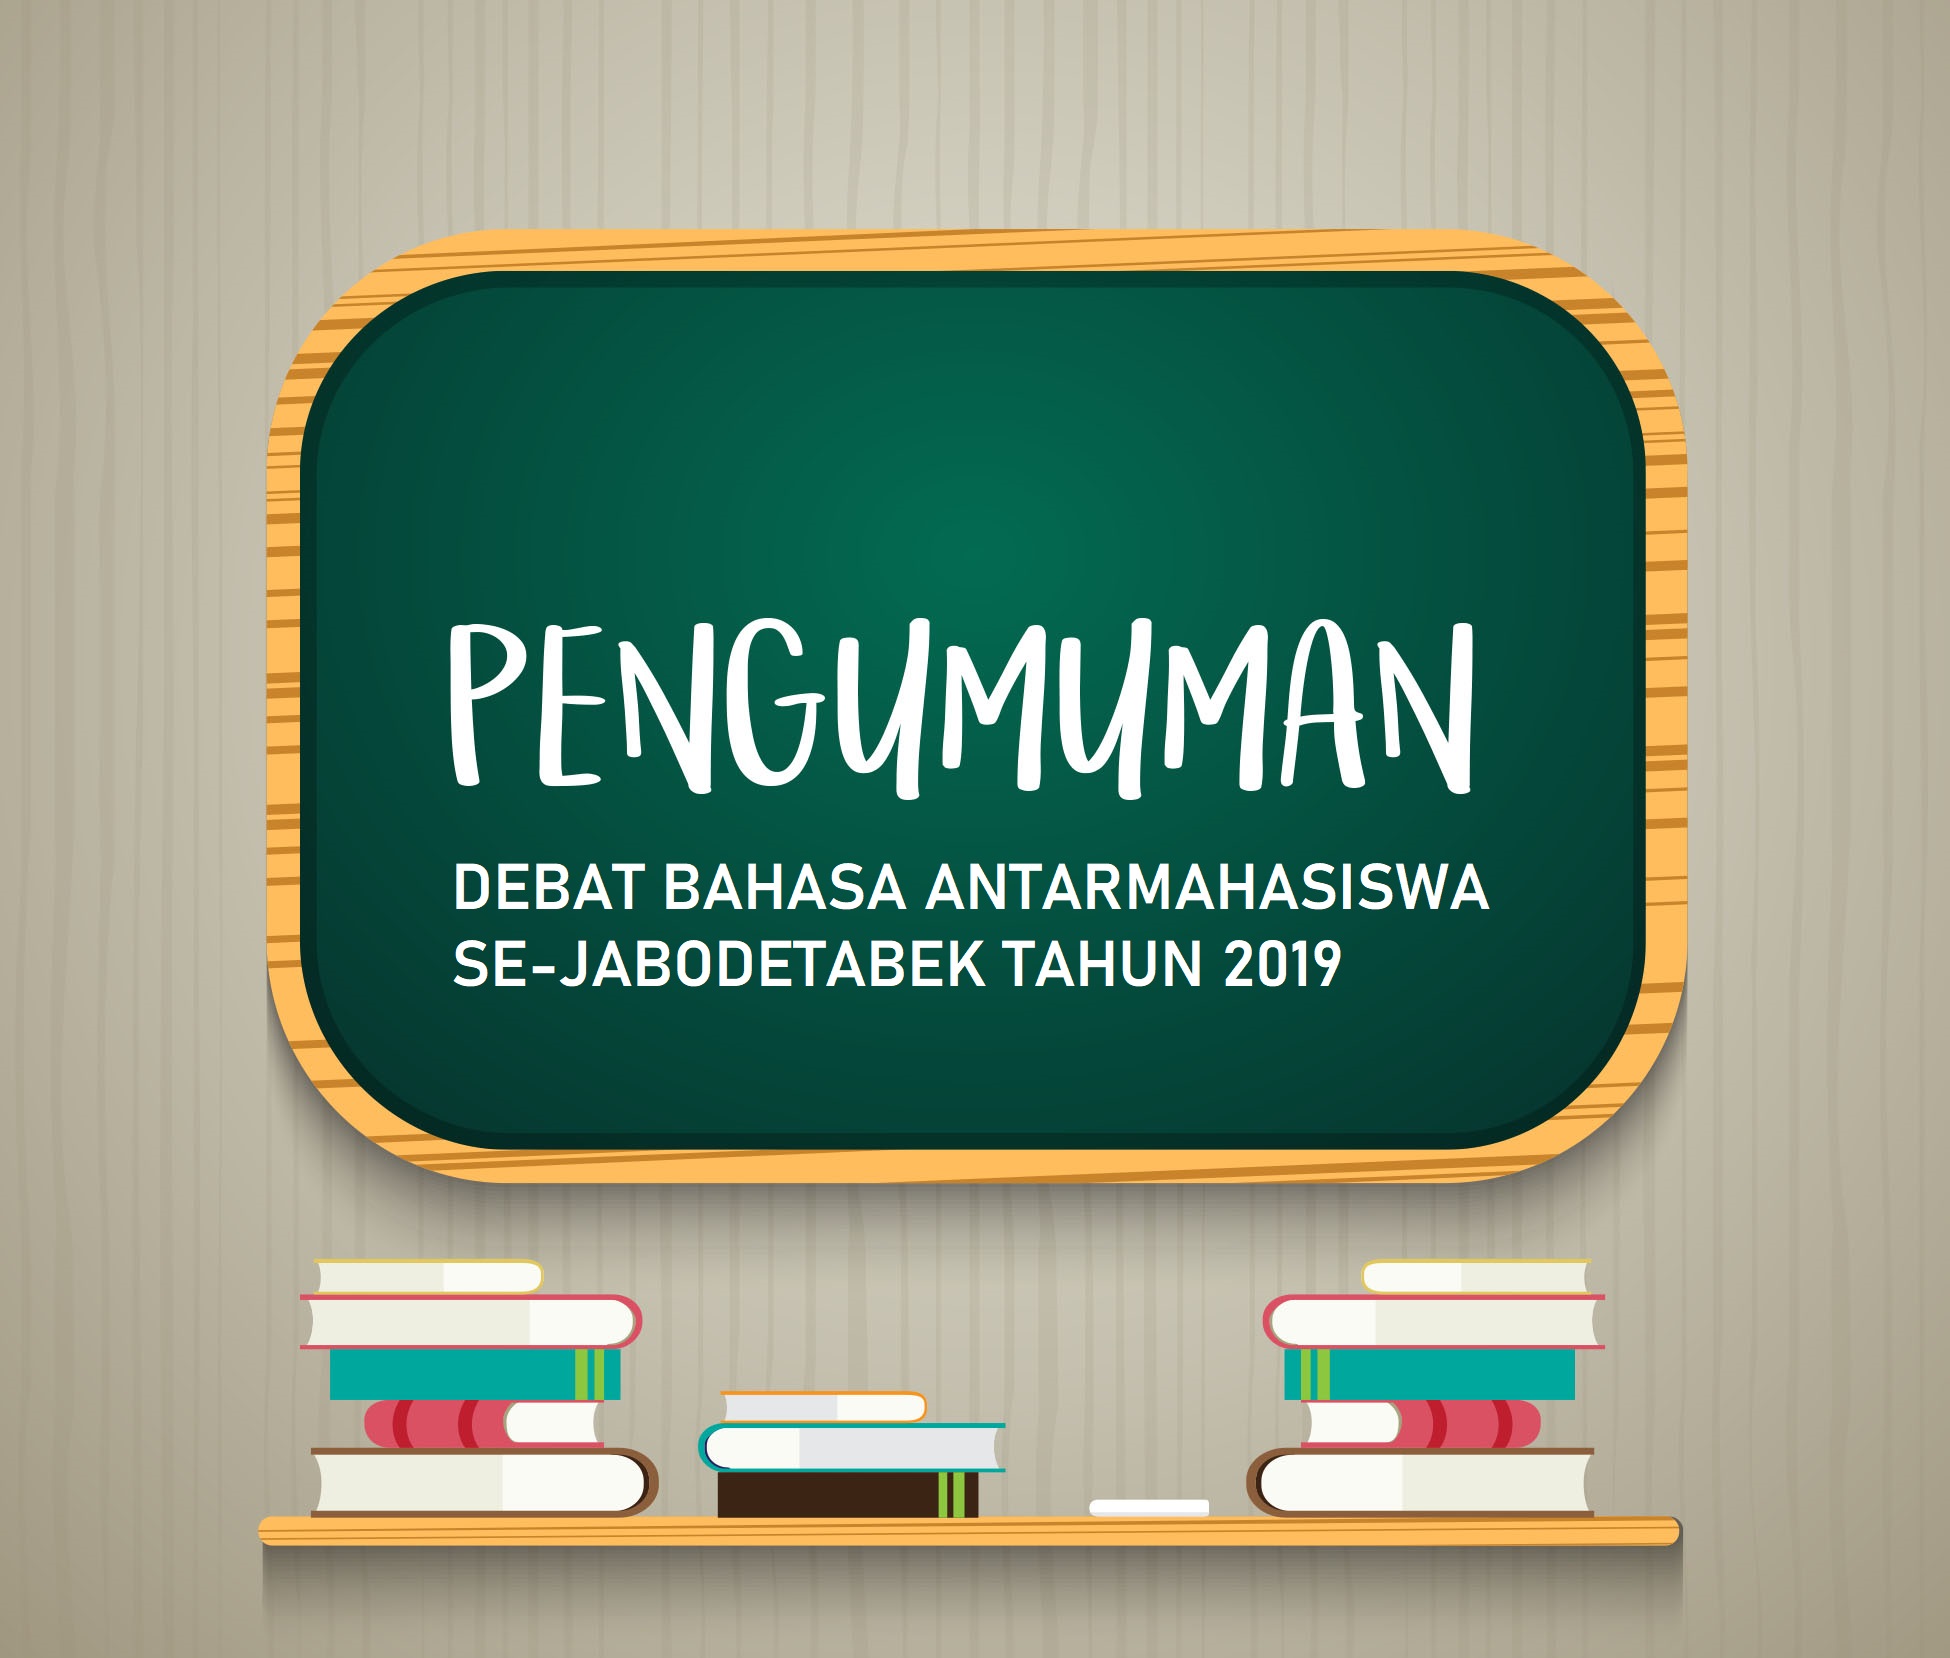 Pengumuman Debat Bahasa Antarmahasiswa Se-Jabodetabek Tahun 2019